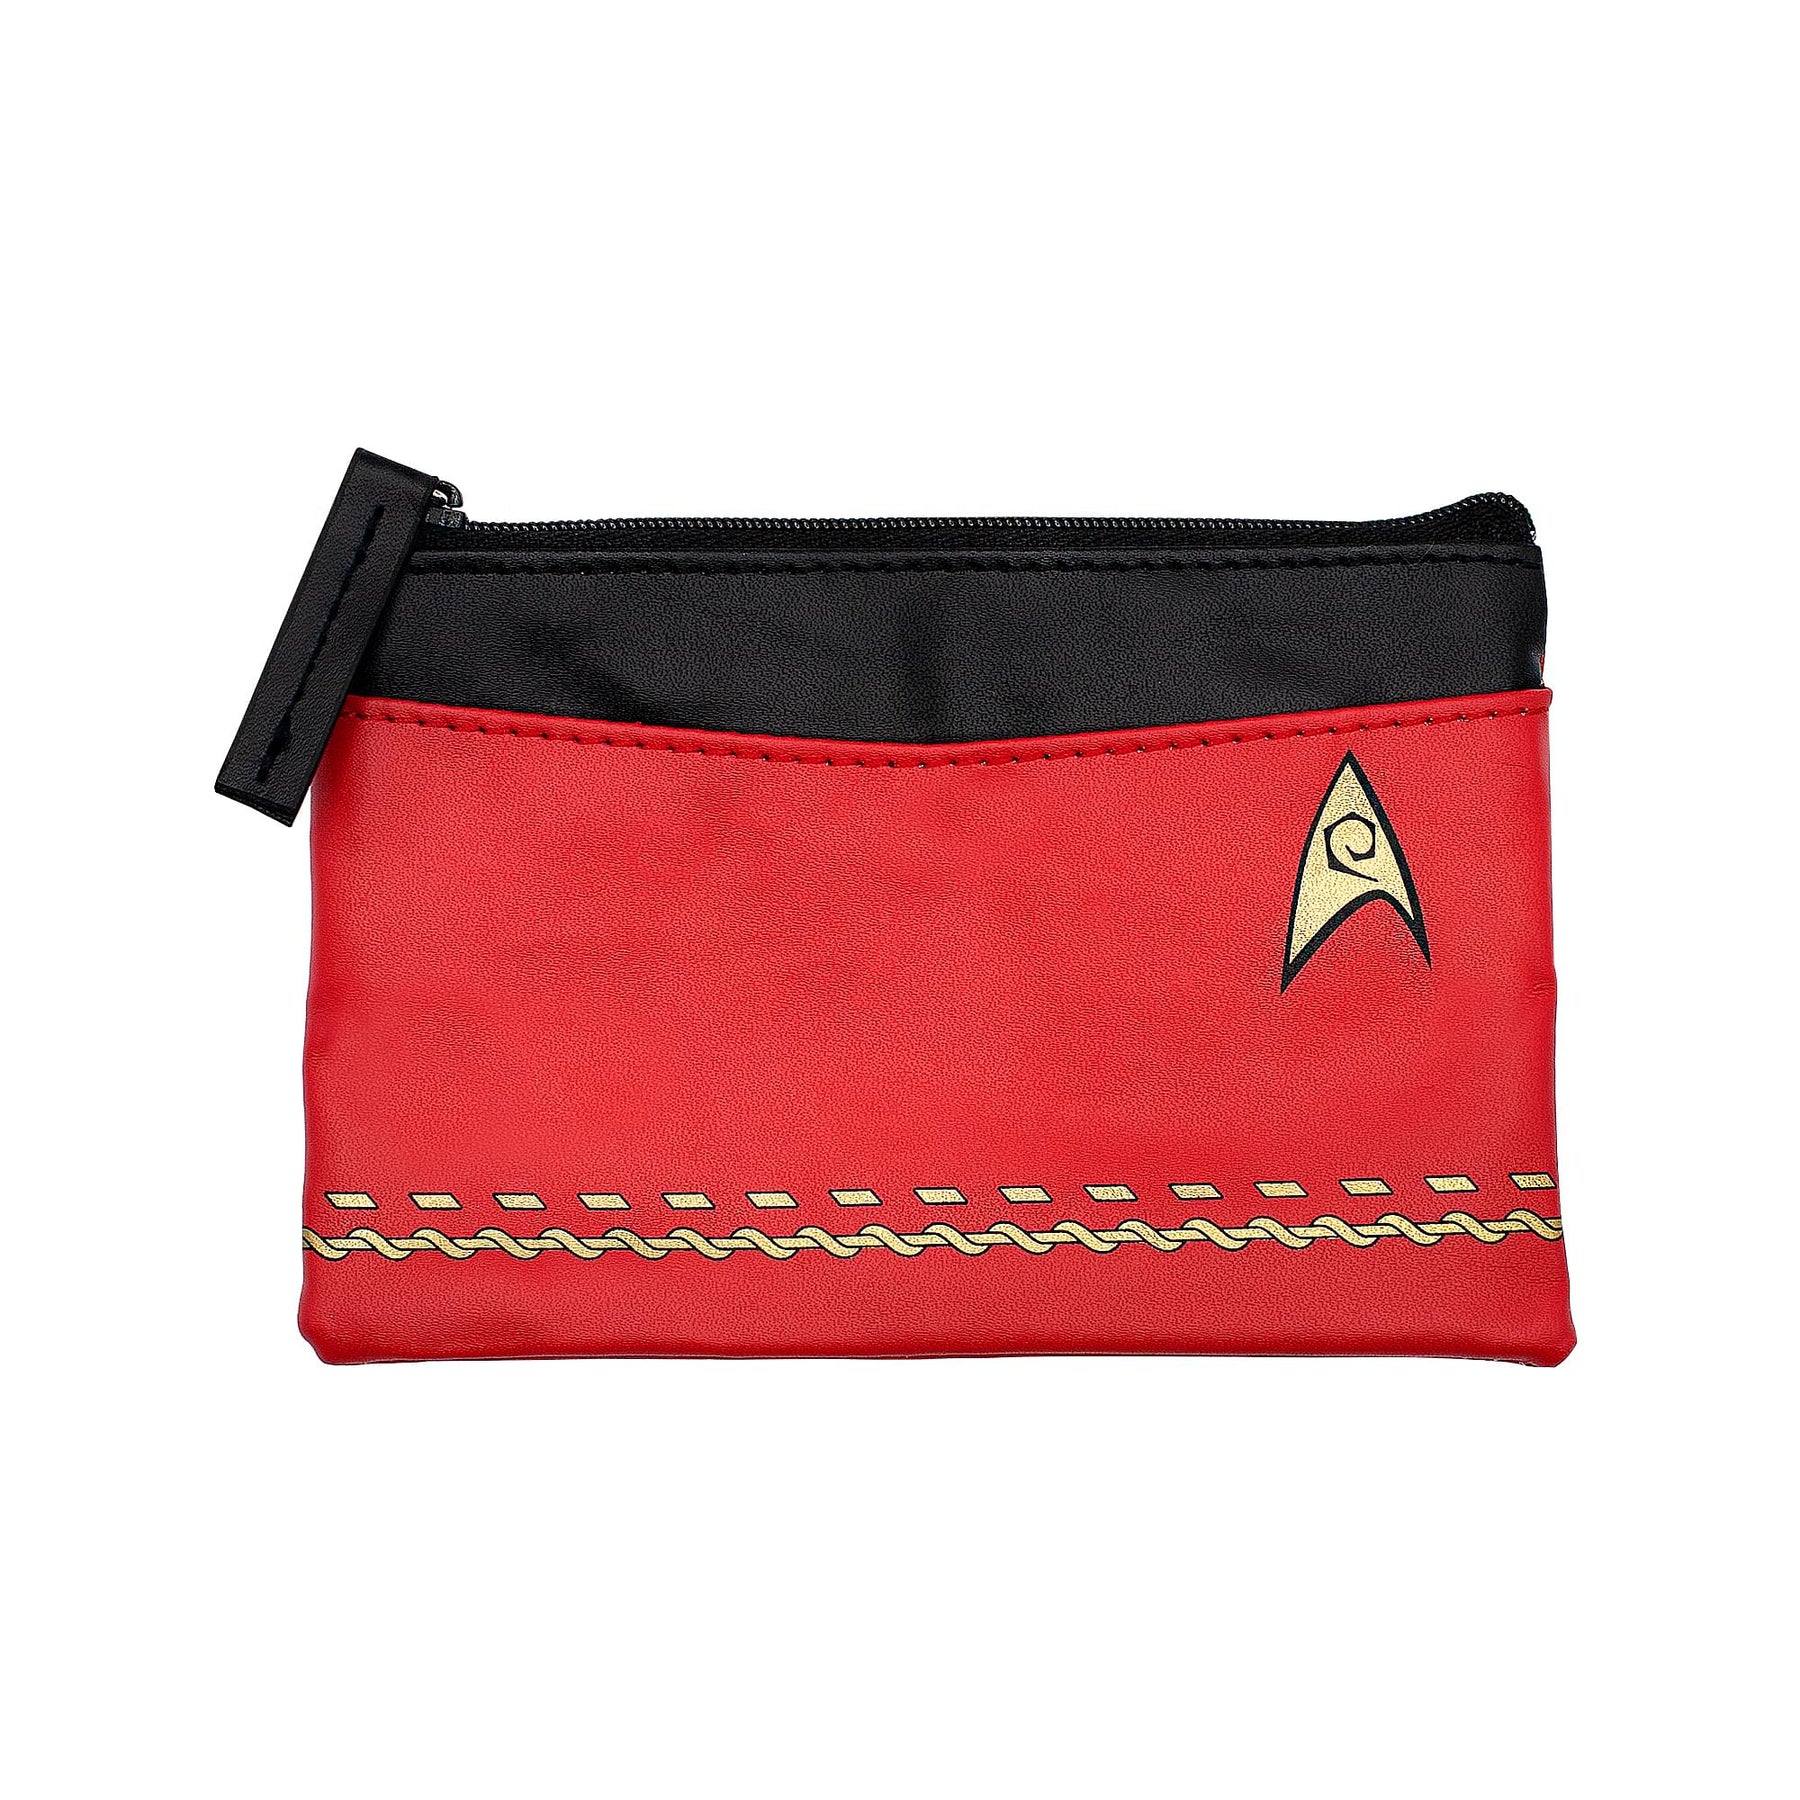 Star Trek Red Uniform Coin Purse